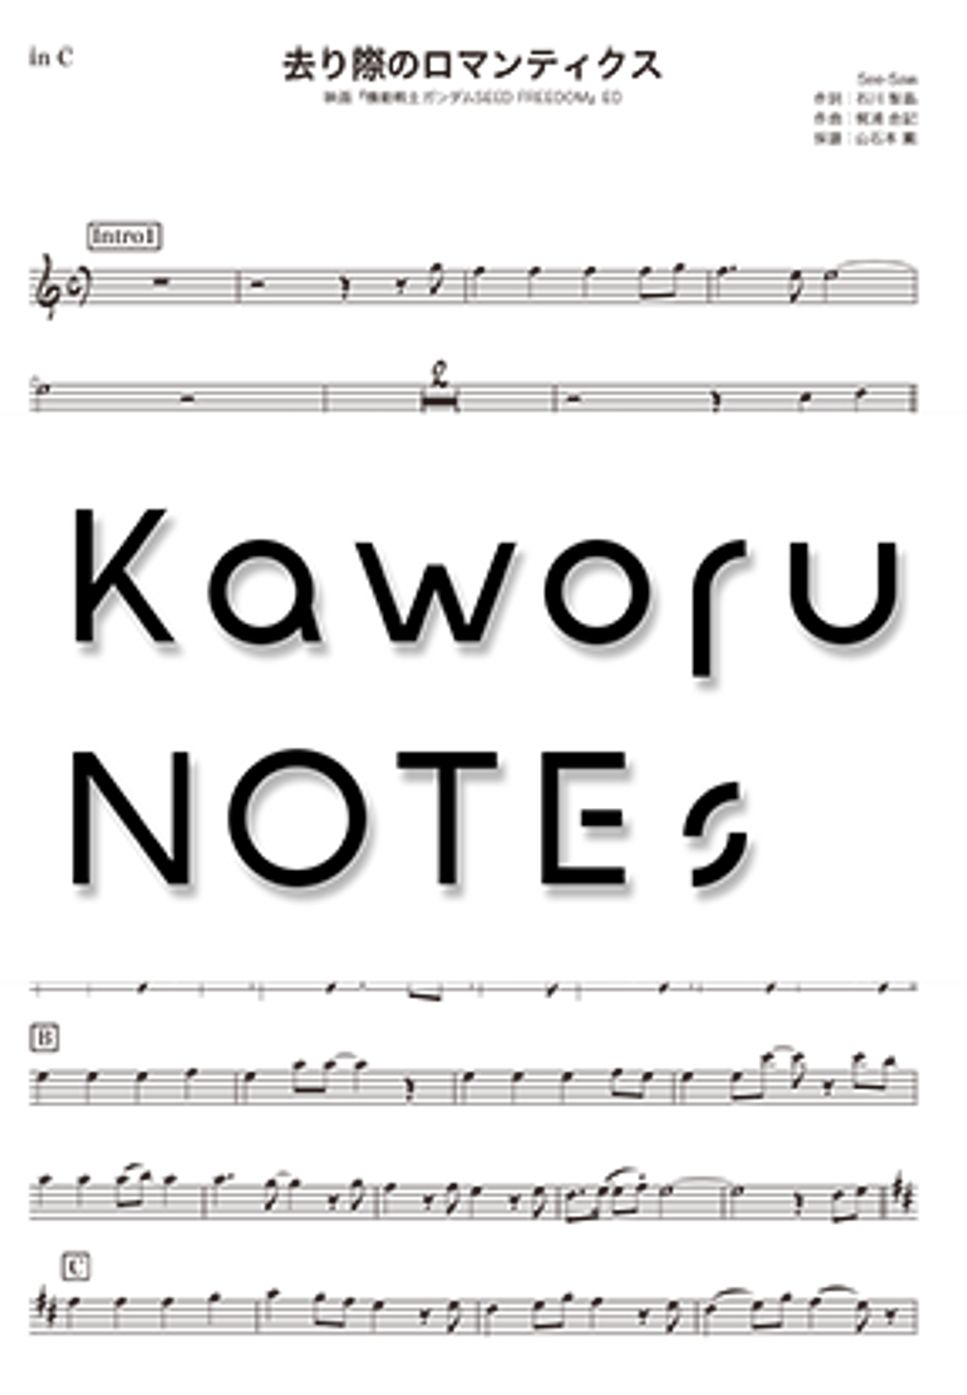 See-Saw - 去り際のロマンティクス（in E♭ /映画『機動戦士ガンダムSEED FREEDOM』） by Kaworu NOTEs